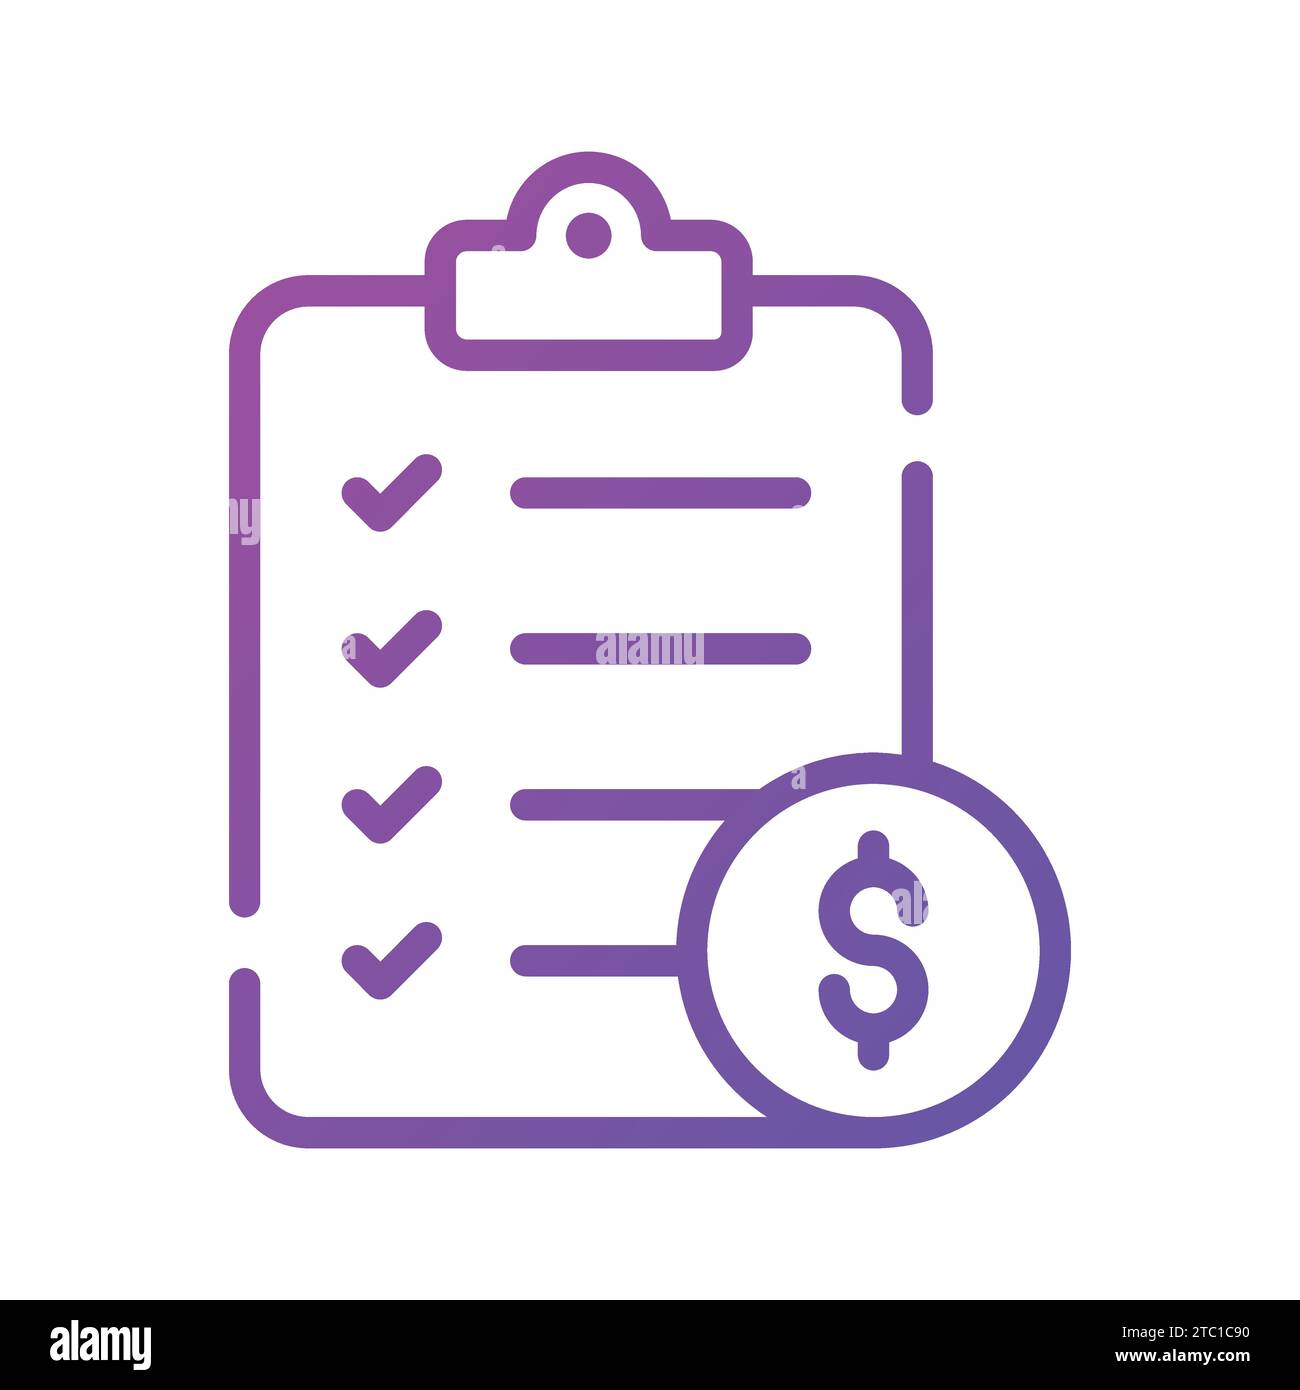 Financial checklist vector design in trendy style, editable icon. Stock Vector